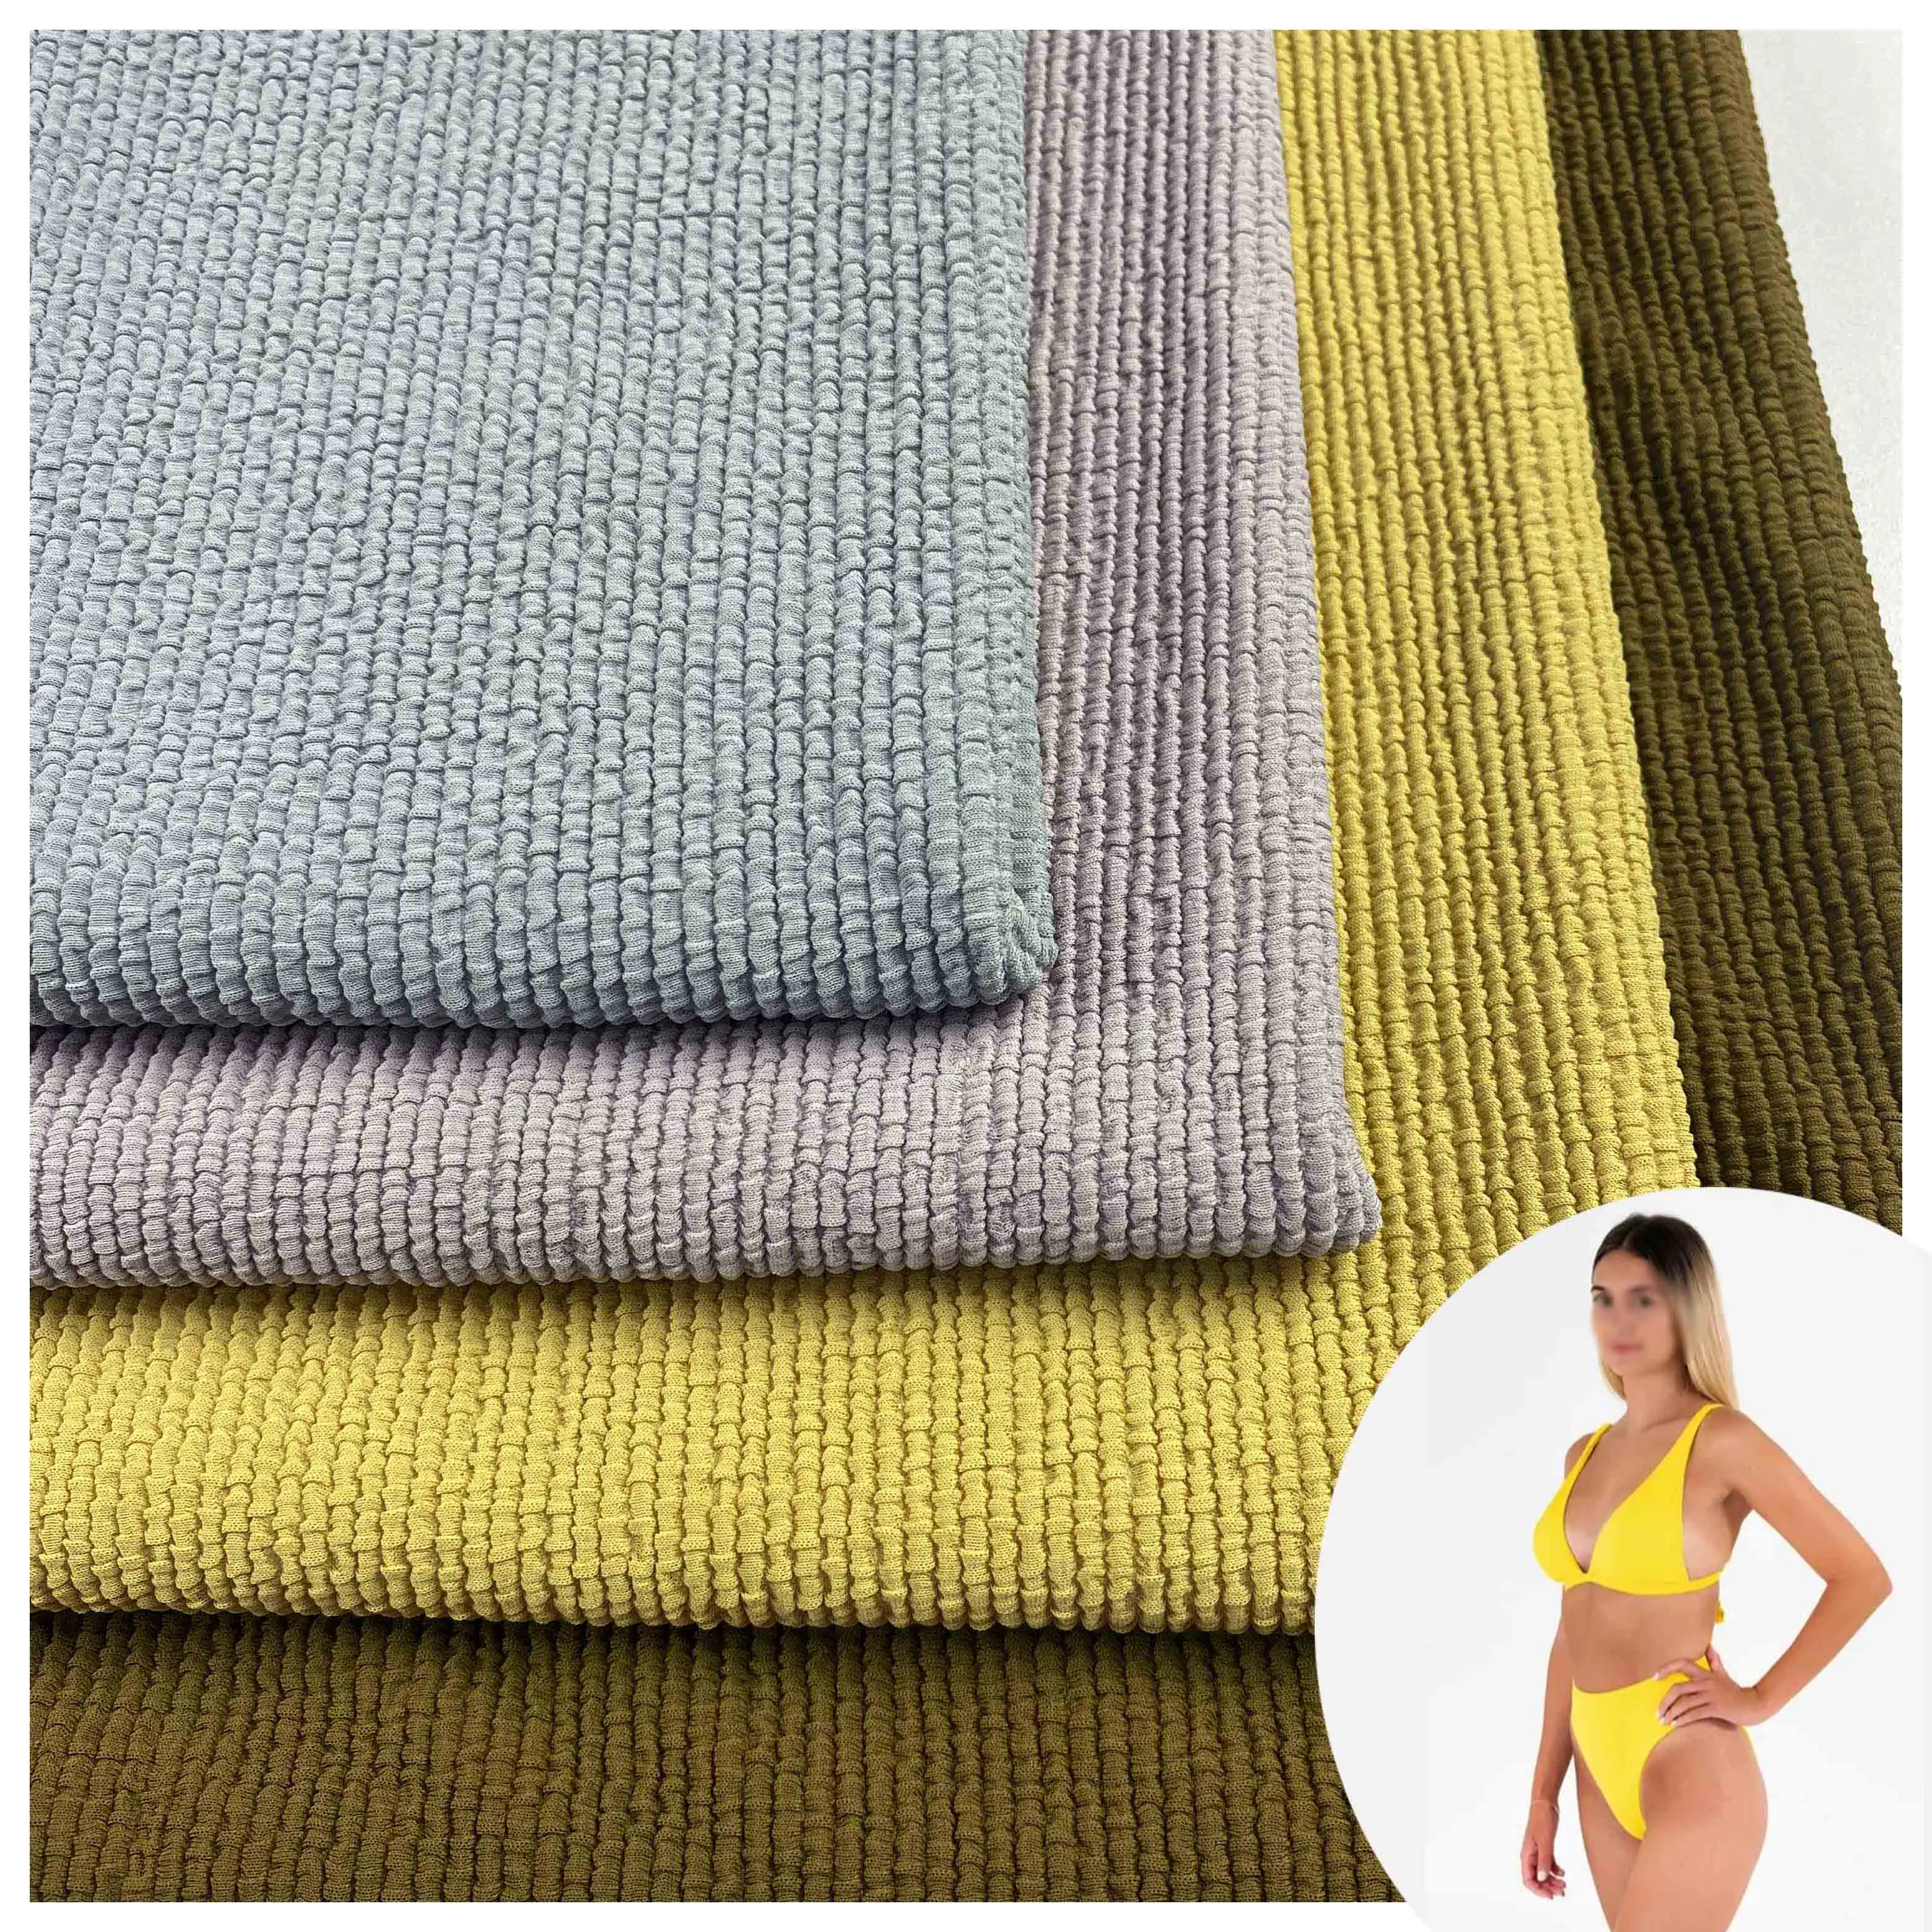 
weft knitted seersucker 4 way stretch nylon lycra texture fabric swimwear  (62391795071)